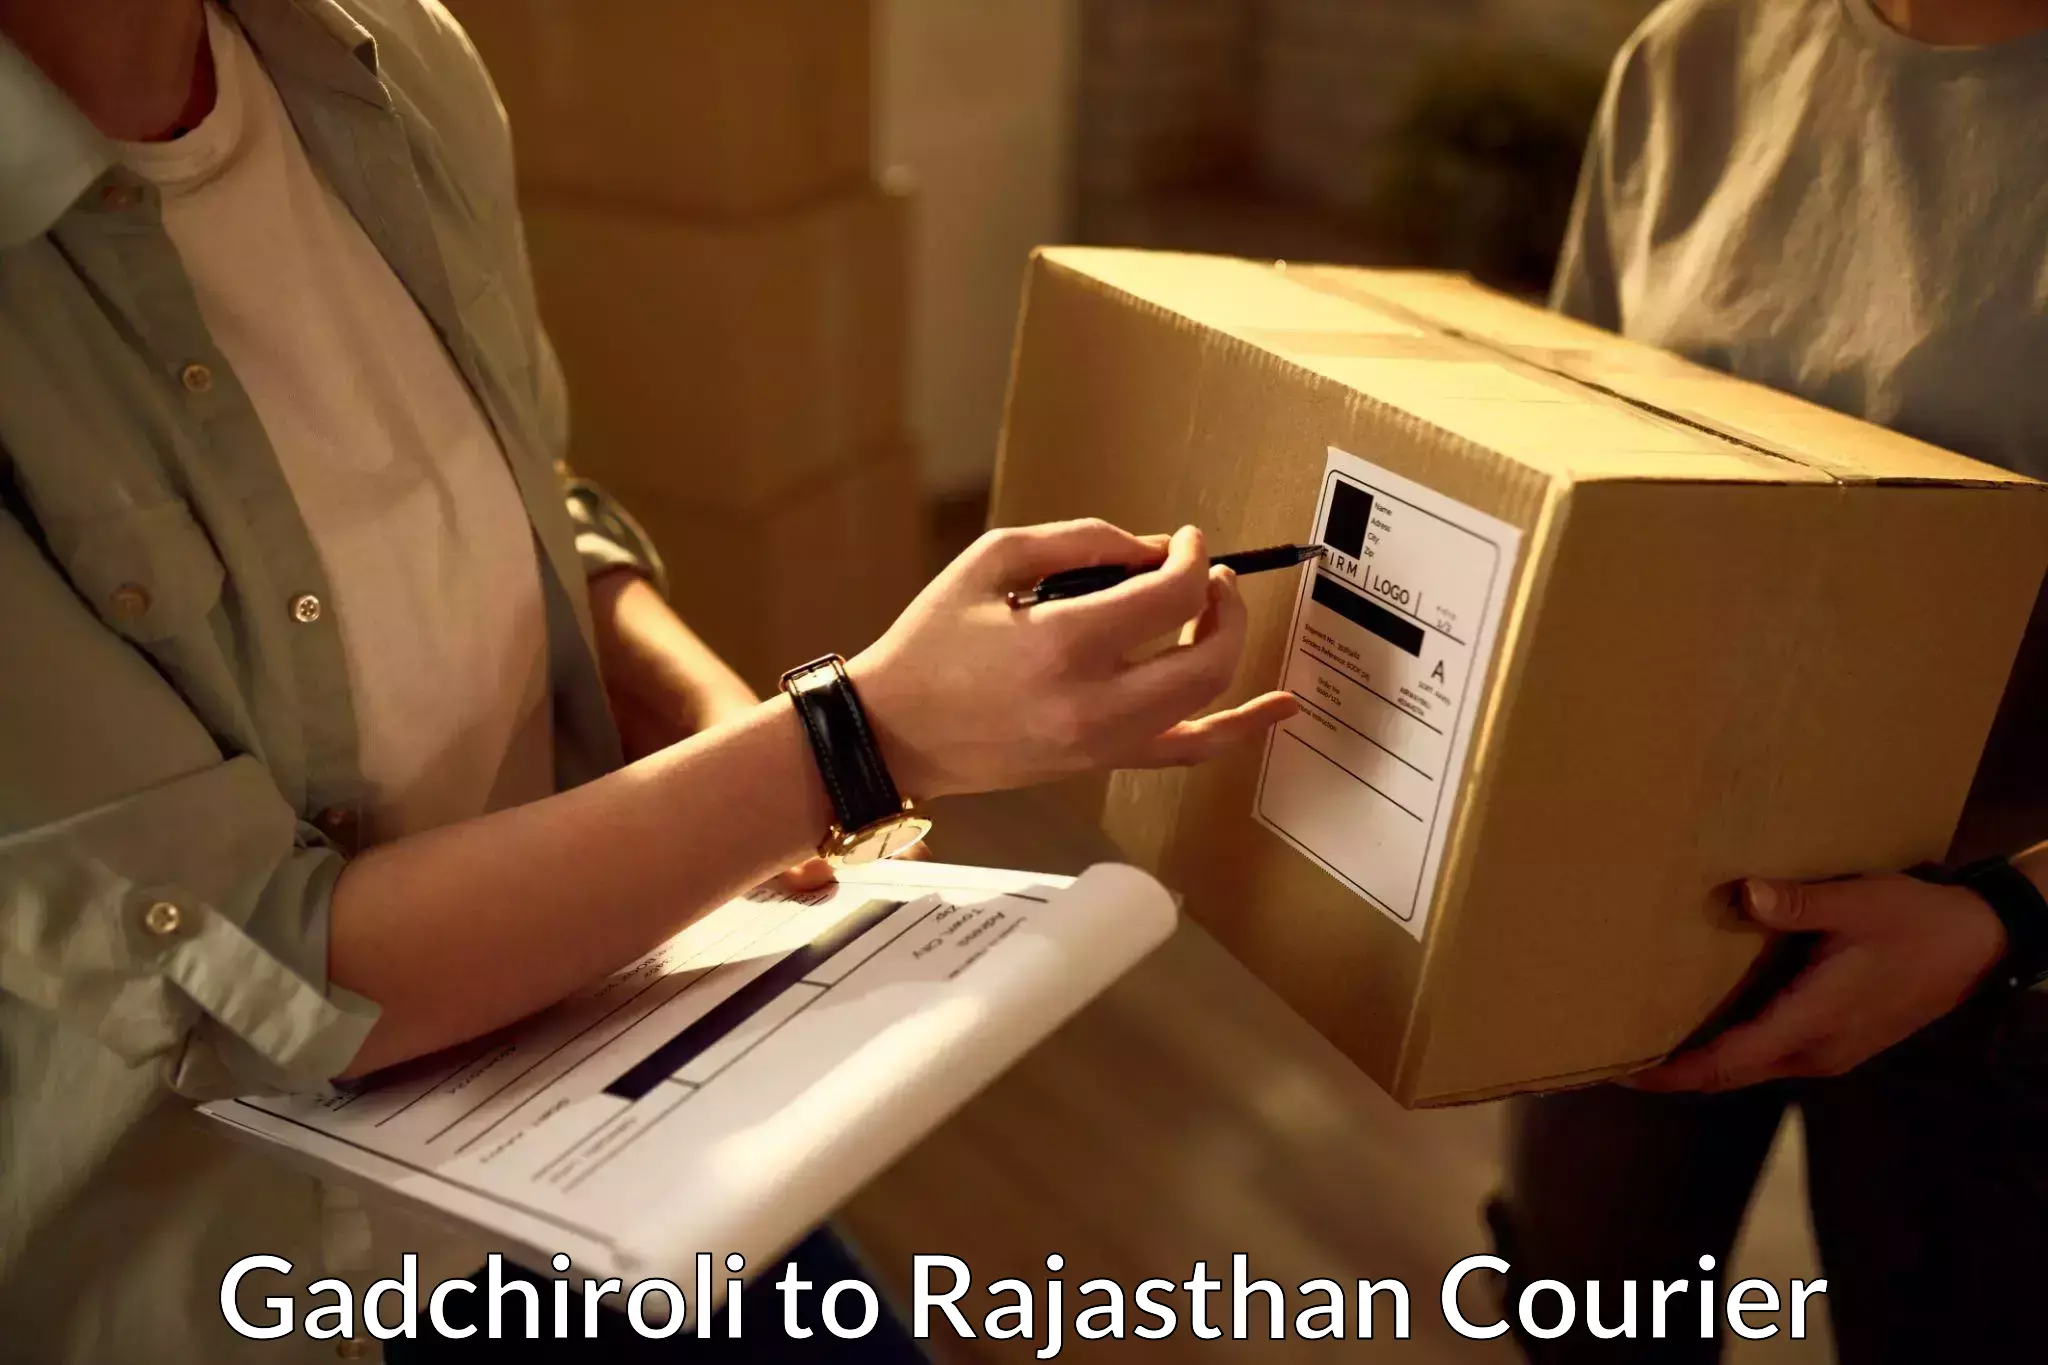 Courier service booking Gadchiroli to Hanumangarh